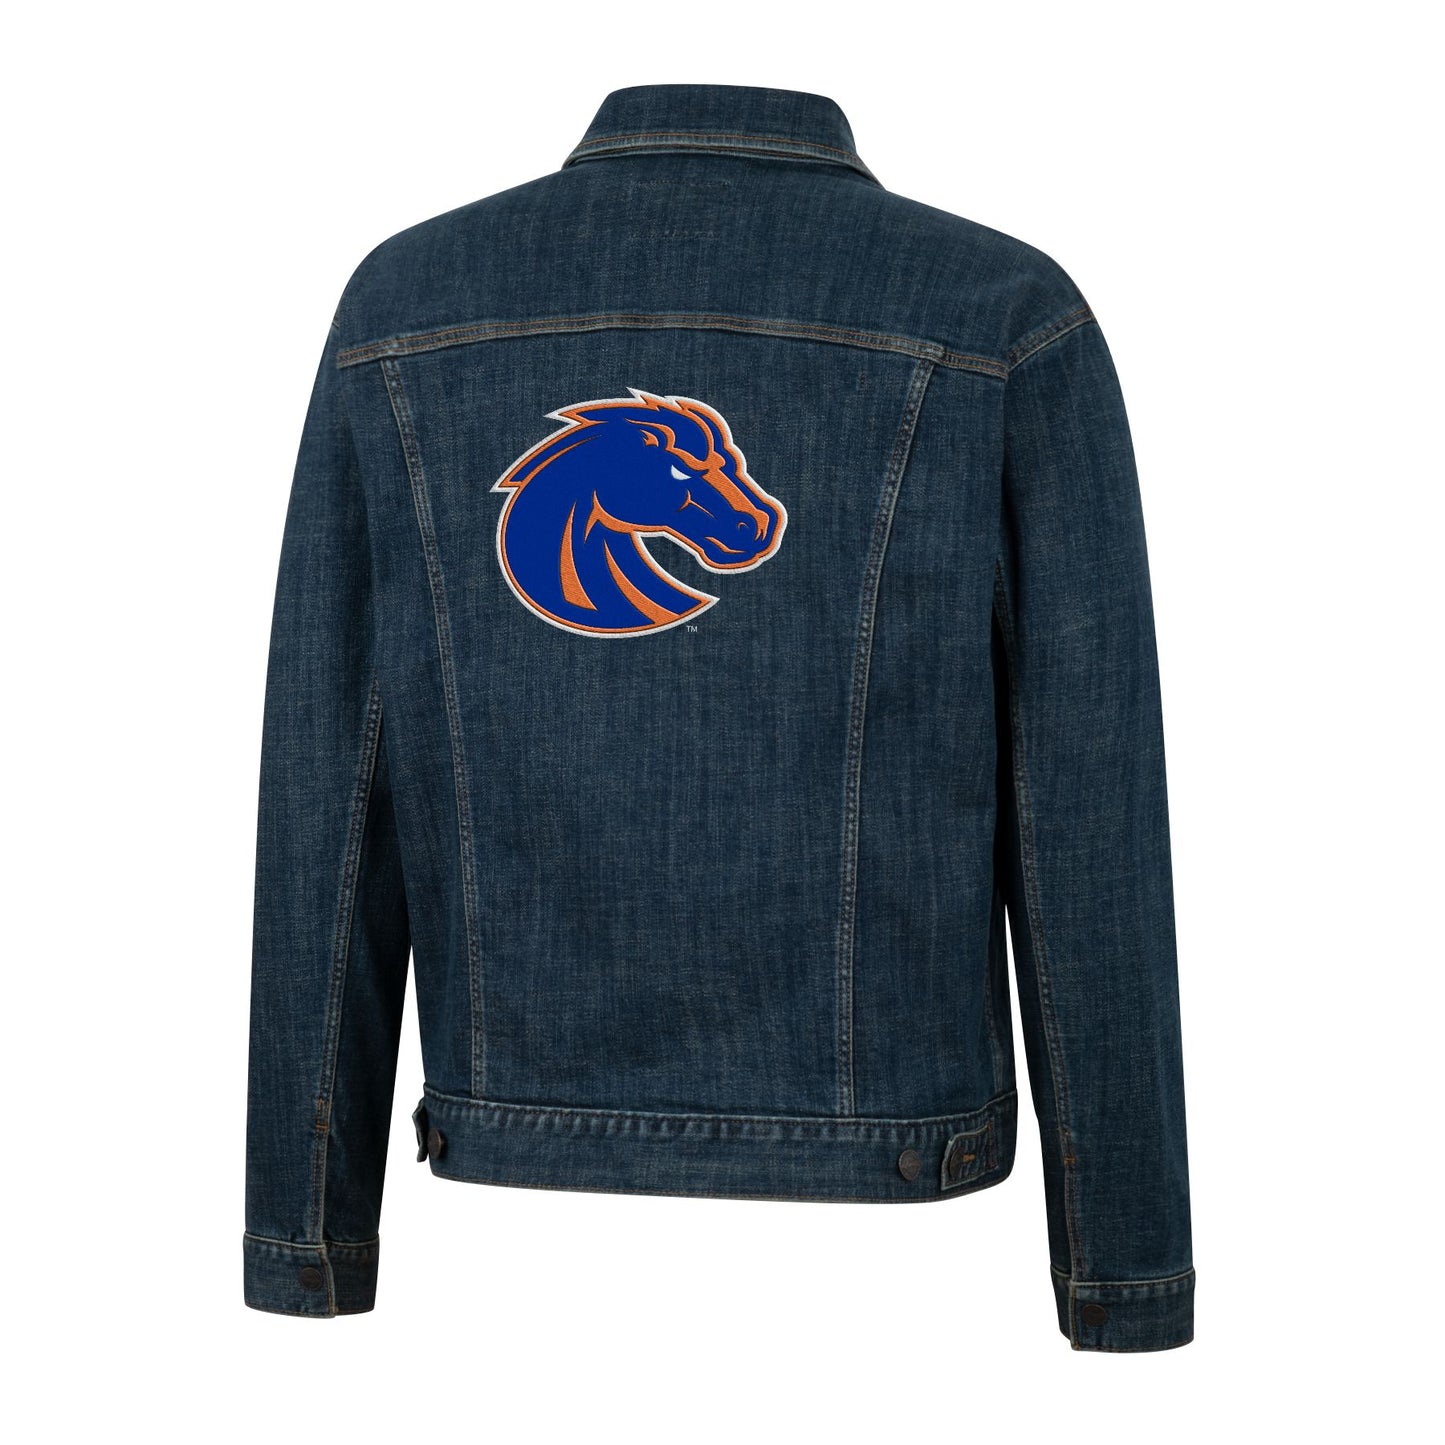 Boise State Broncos Wrangler Women's Button Up Jacket (Denim)